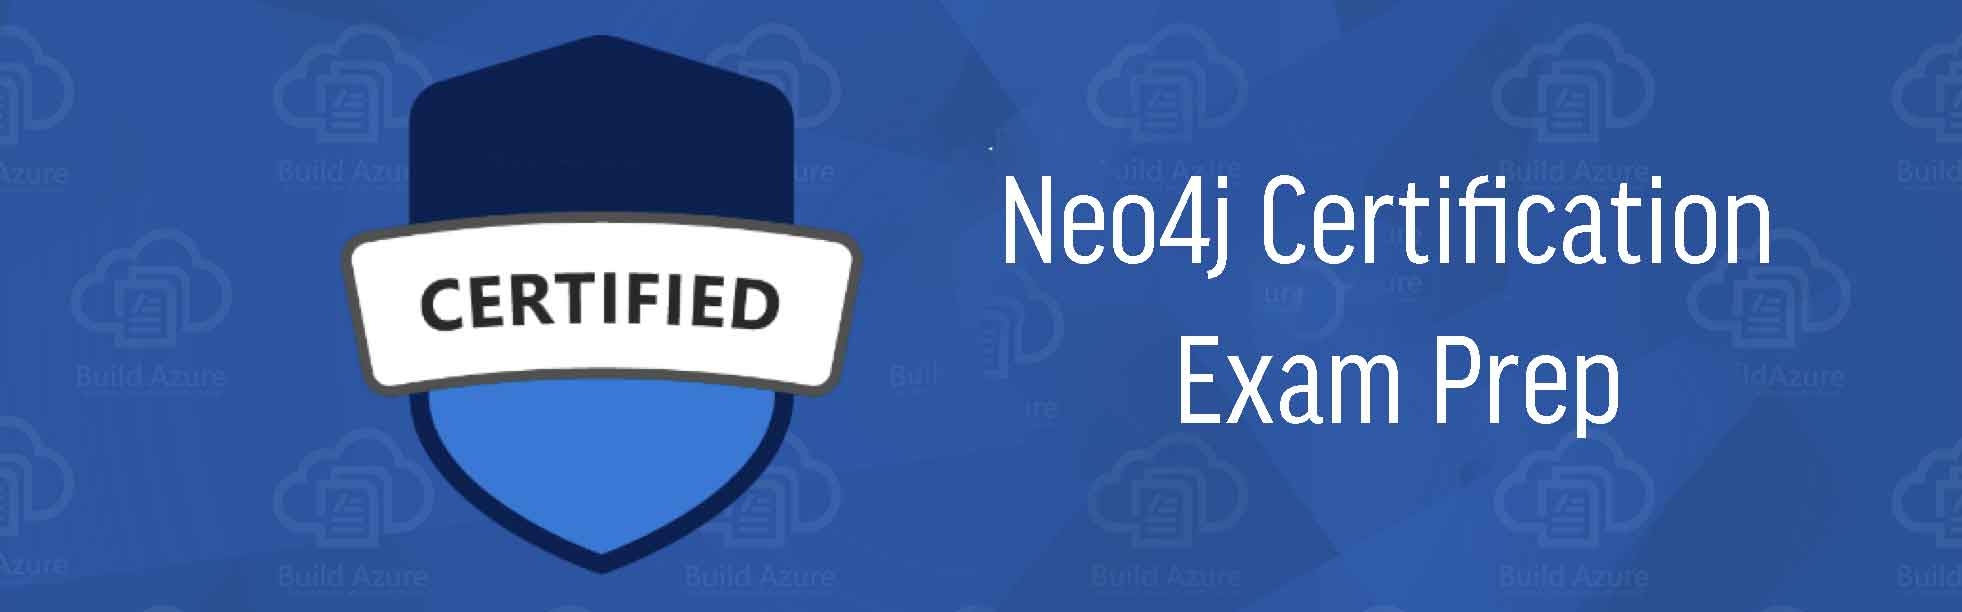 Neo4j Certification Exam Prep